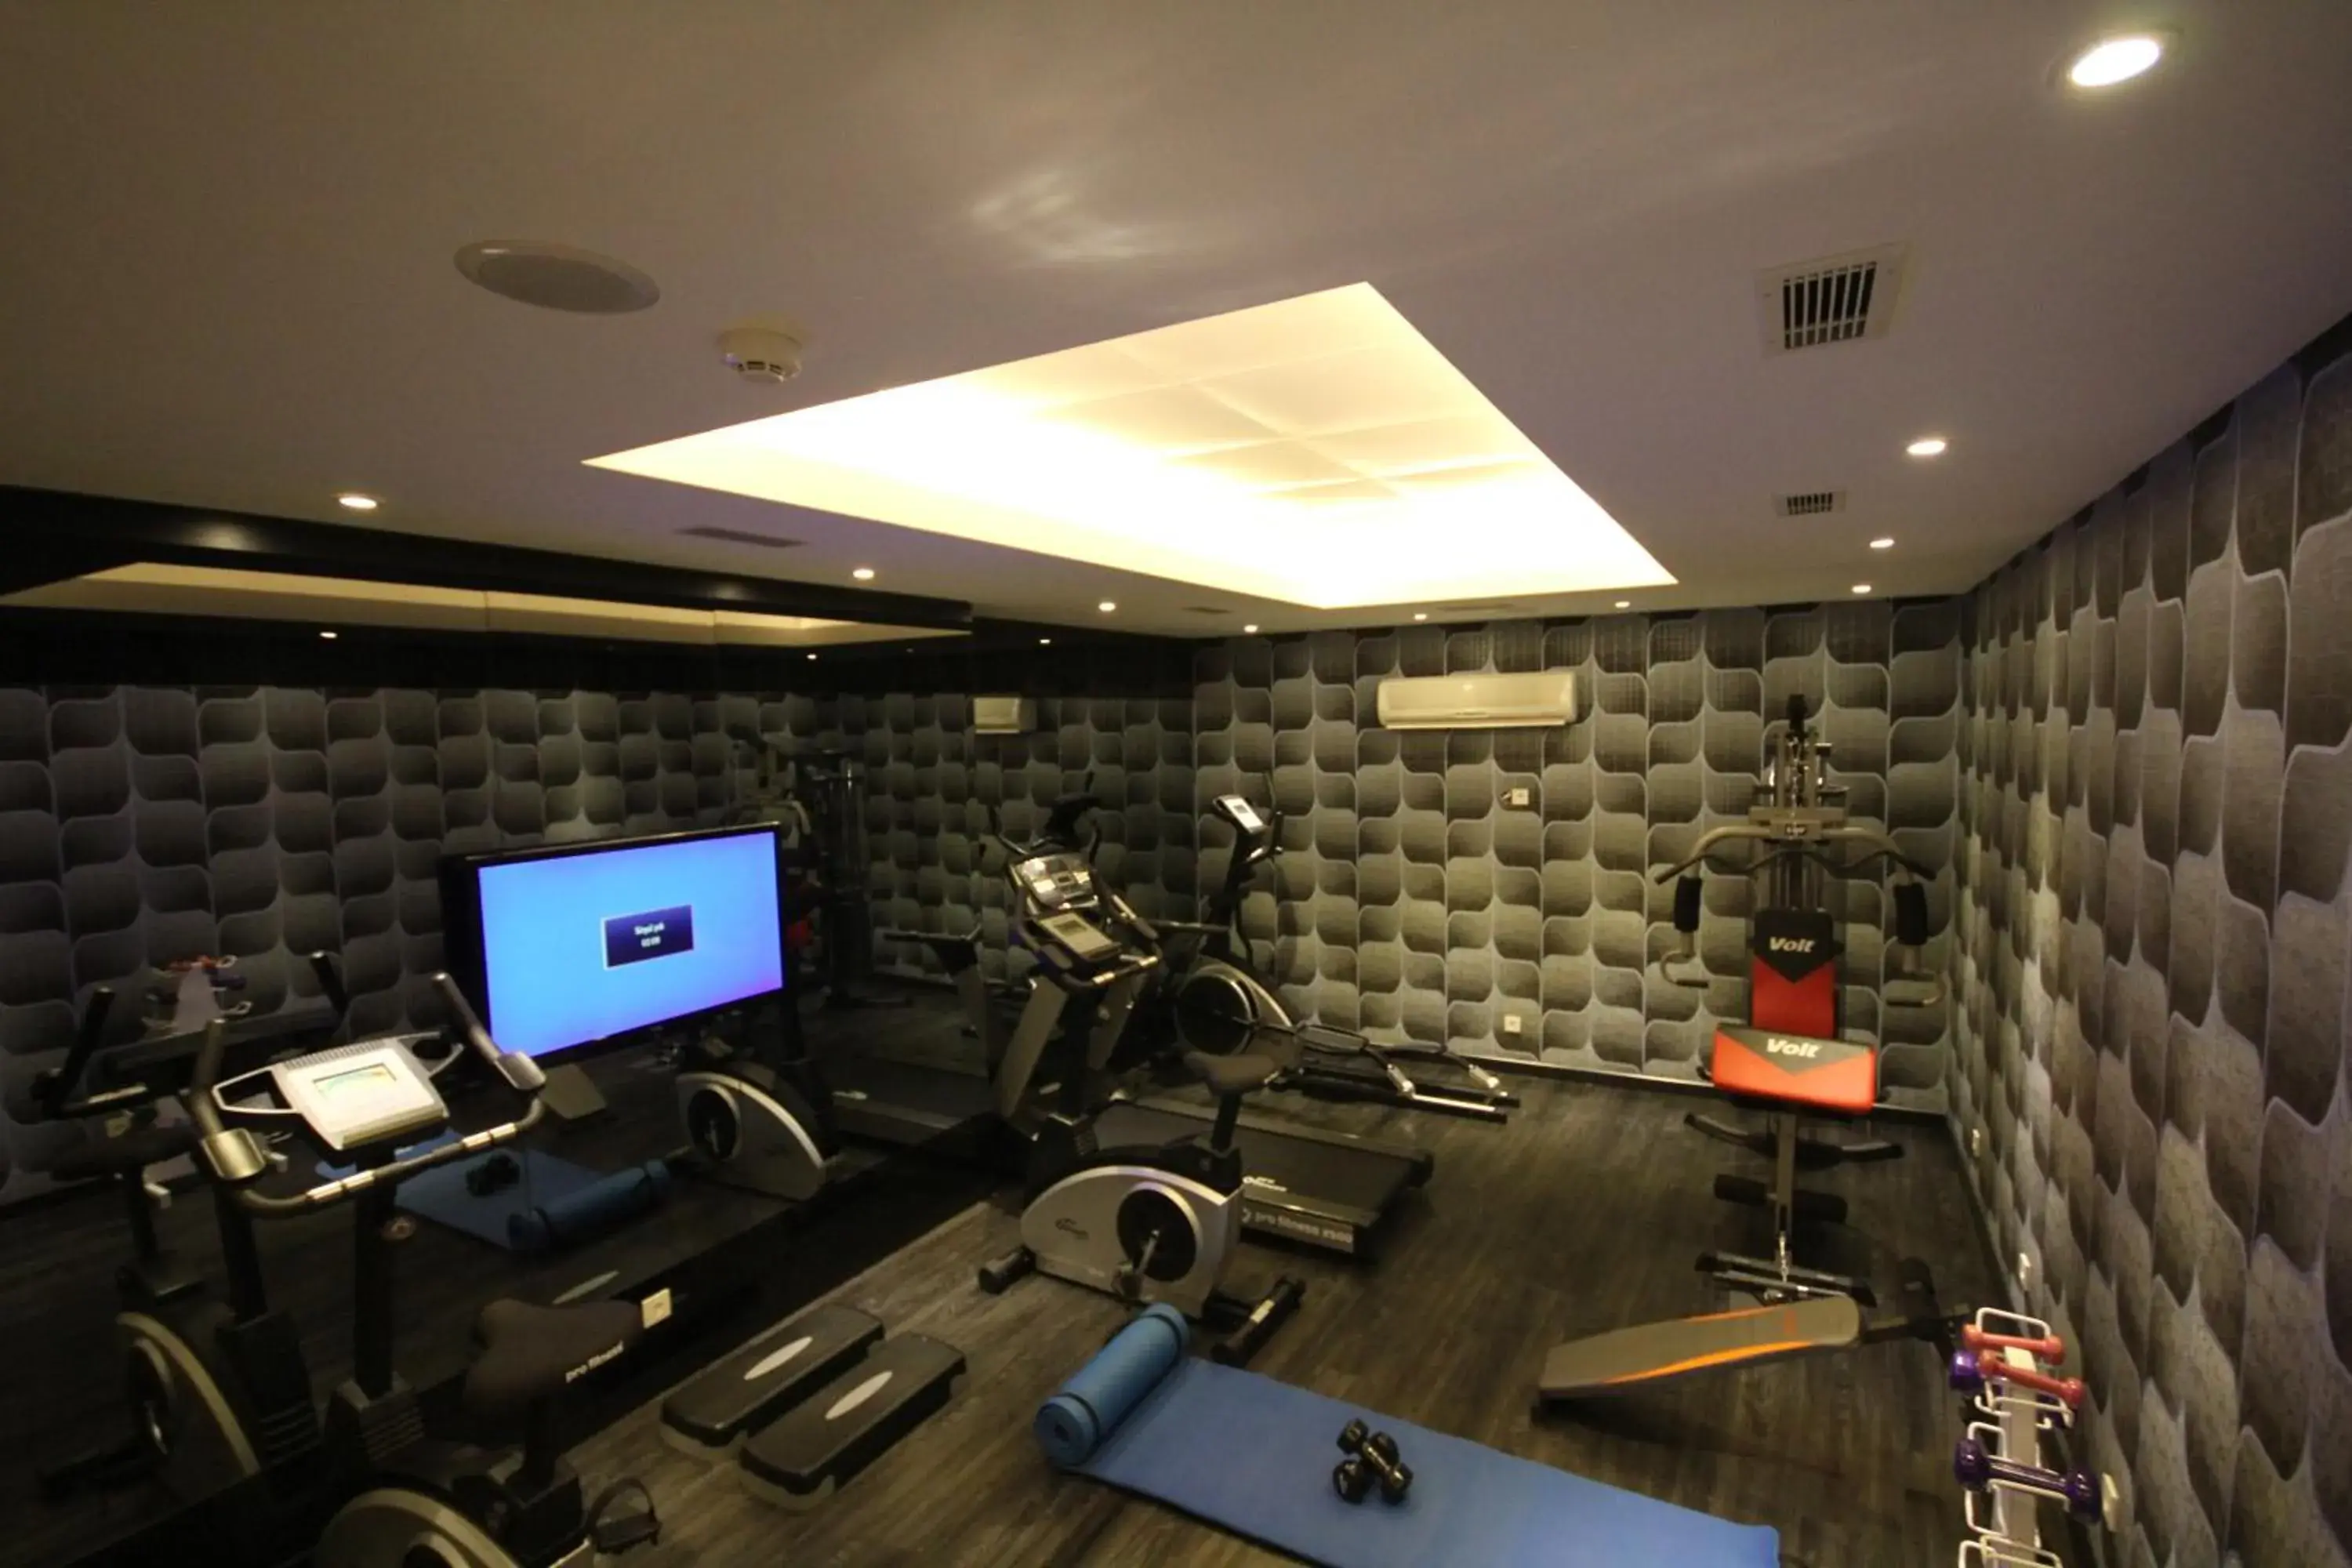 Fitness centre/facilities in Grand Washington Hotel